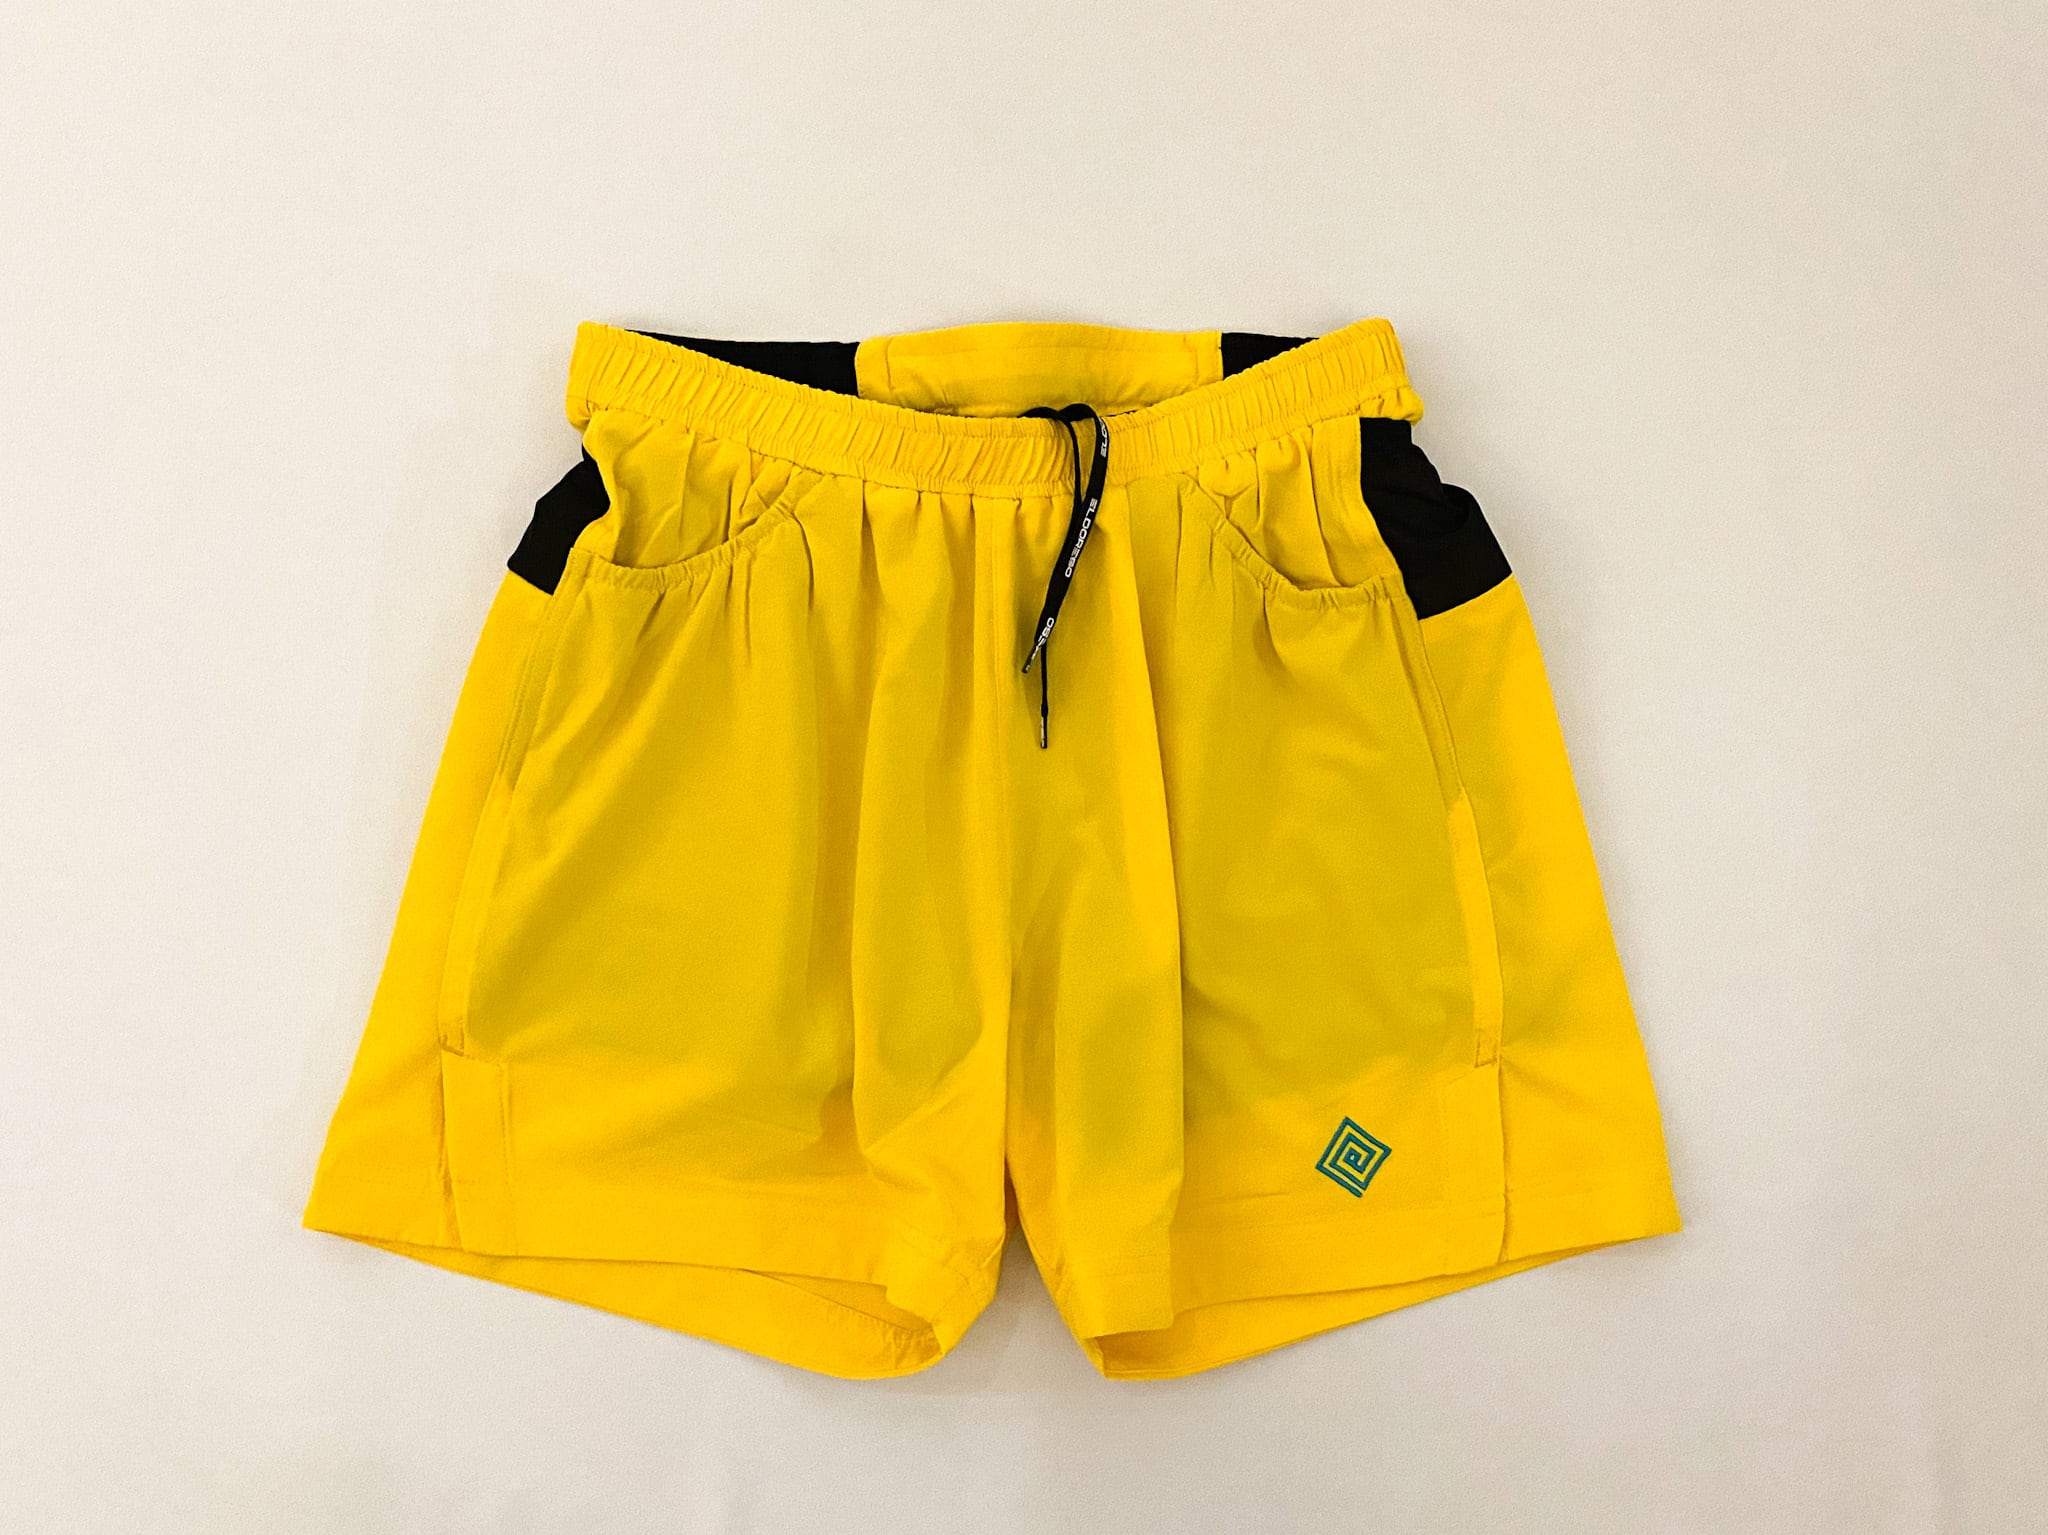 ELDORESO.(エルドレッソ) Neo Bikila Shorts(Yellow)  メンズ・レディース ショートパンツ